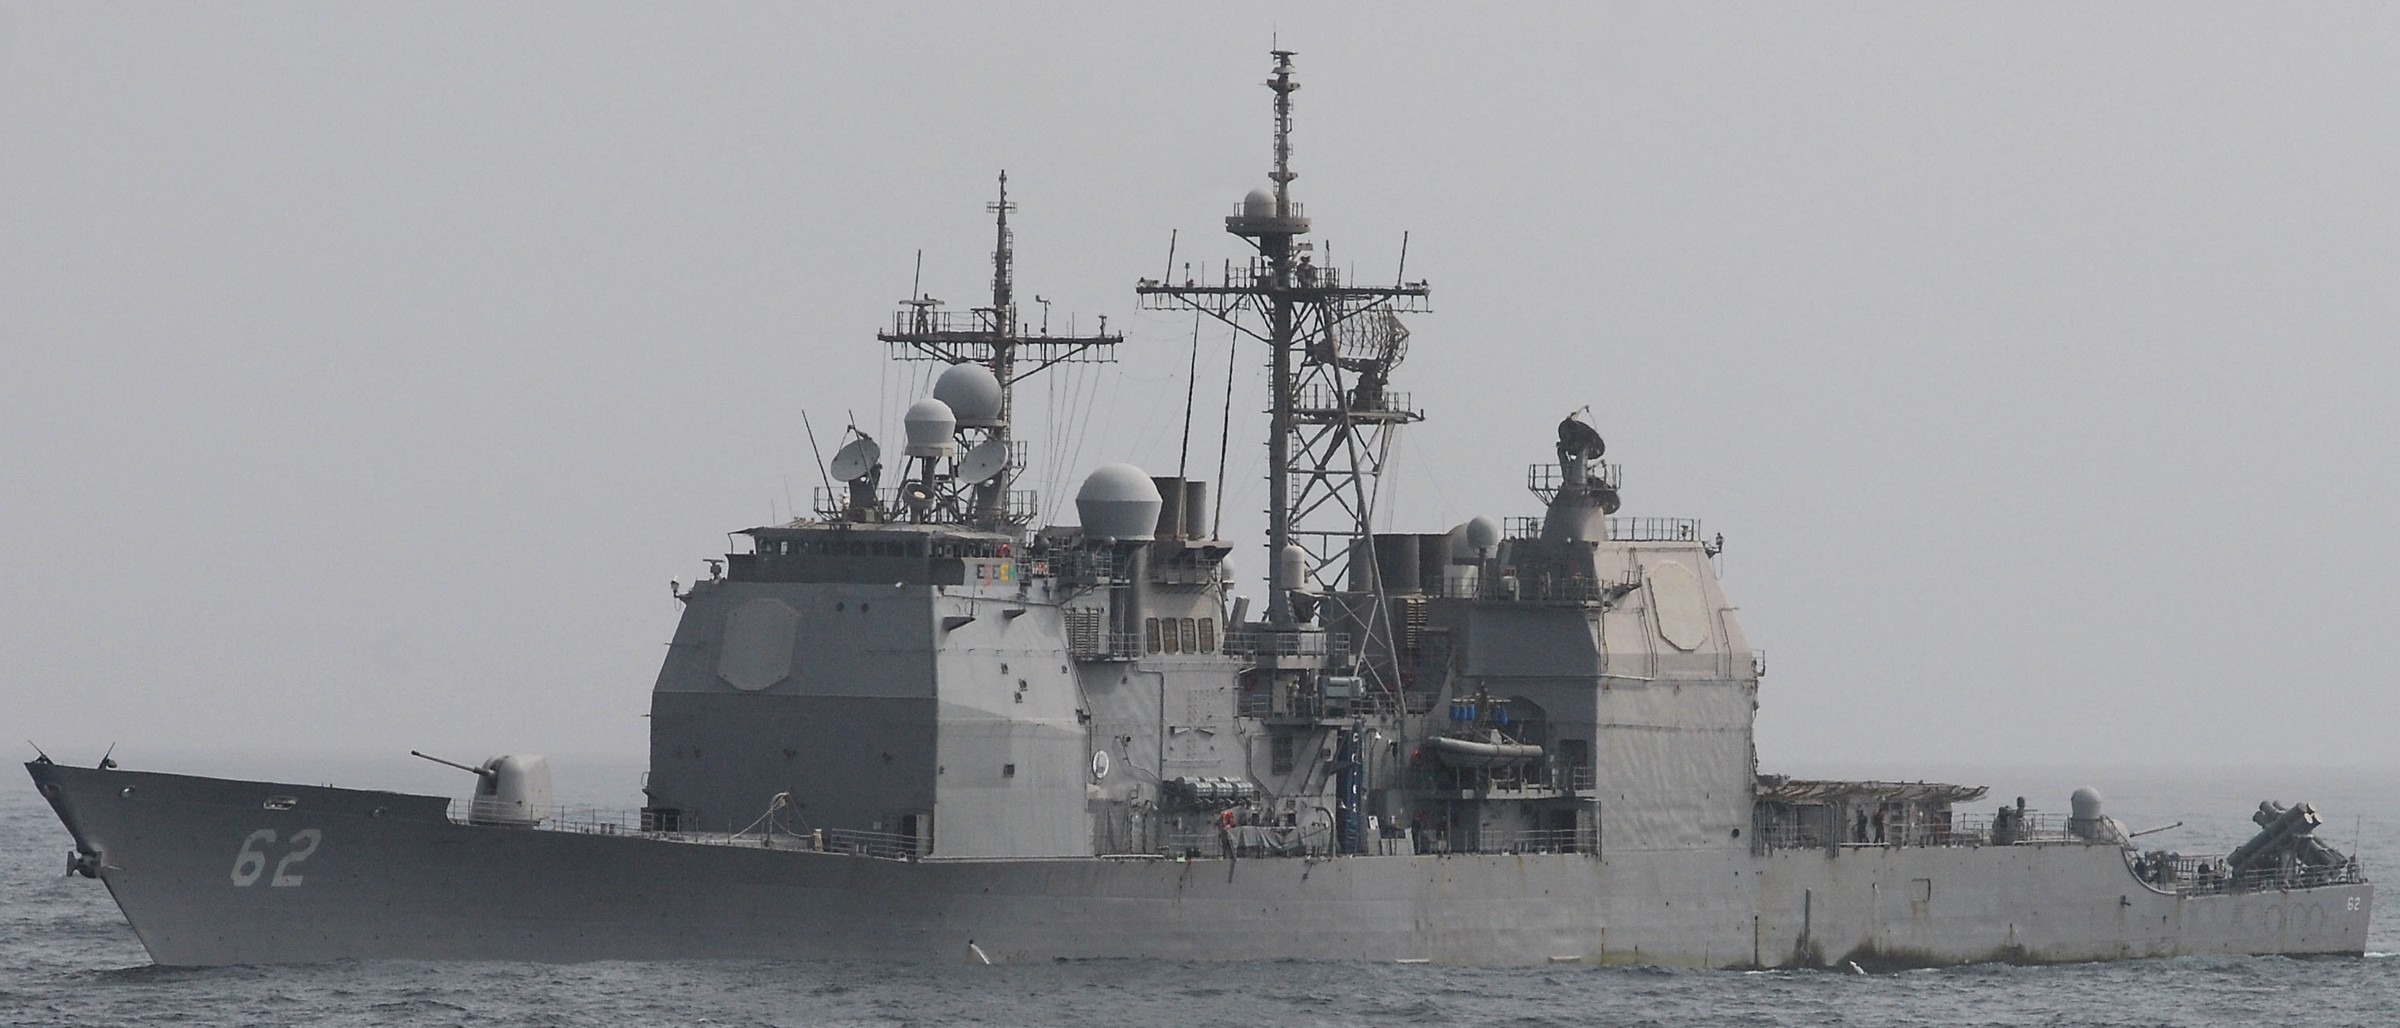 cg-62 uss chancellorsville ticonderoga class guided missile cruiser aegis us navy 29